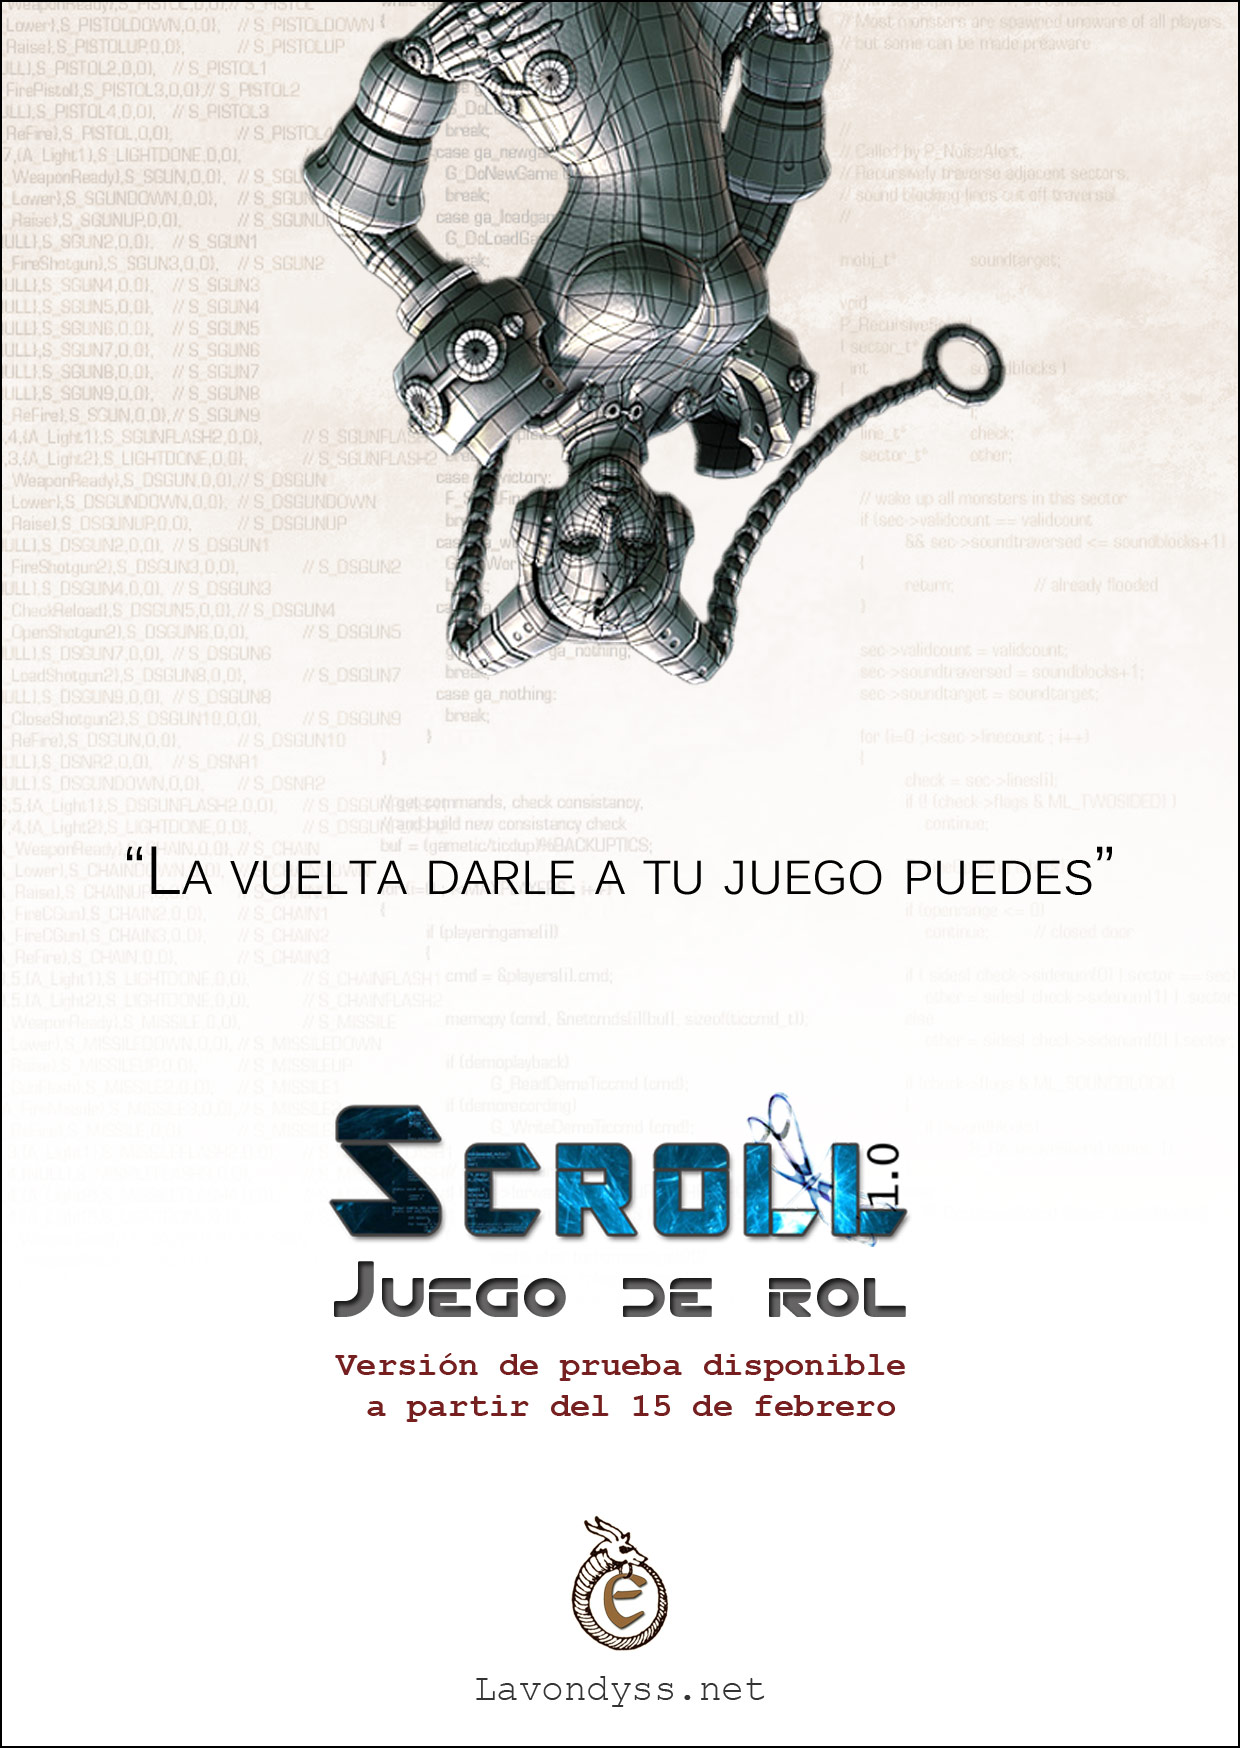 Promoción de Scroll